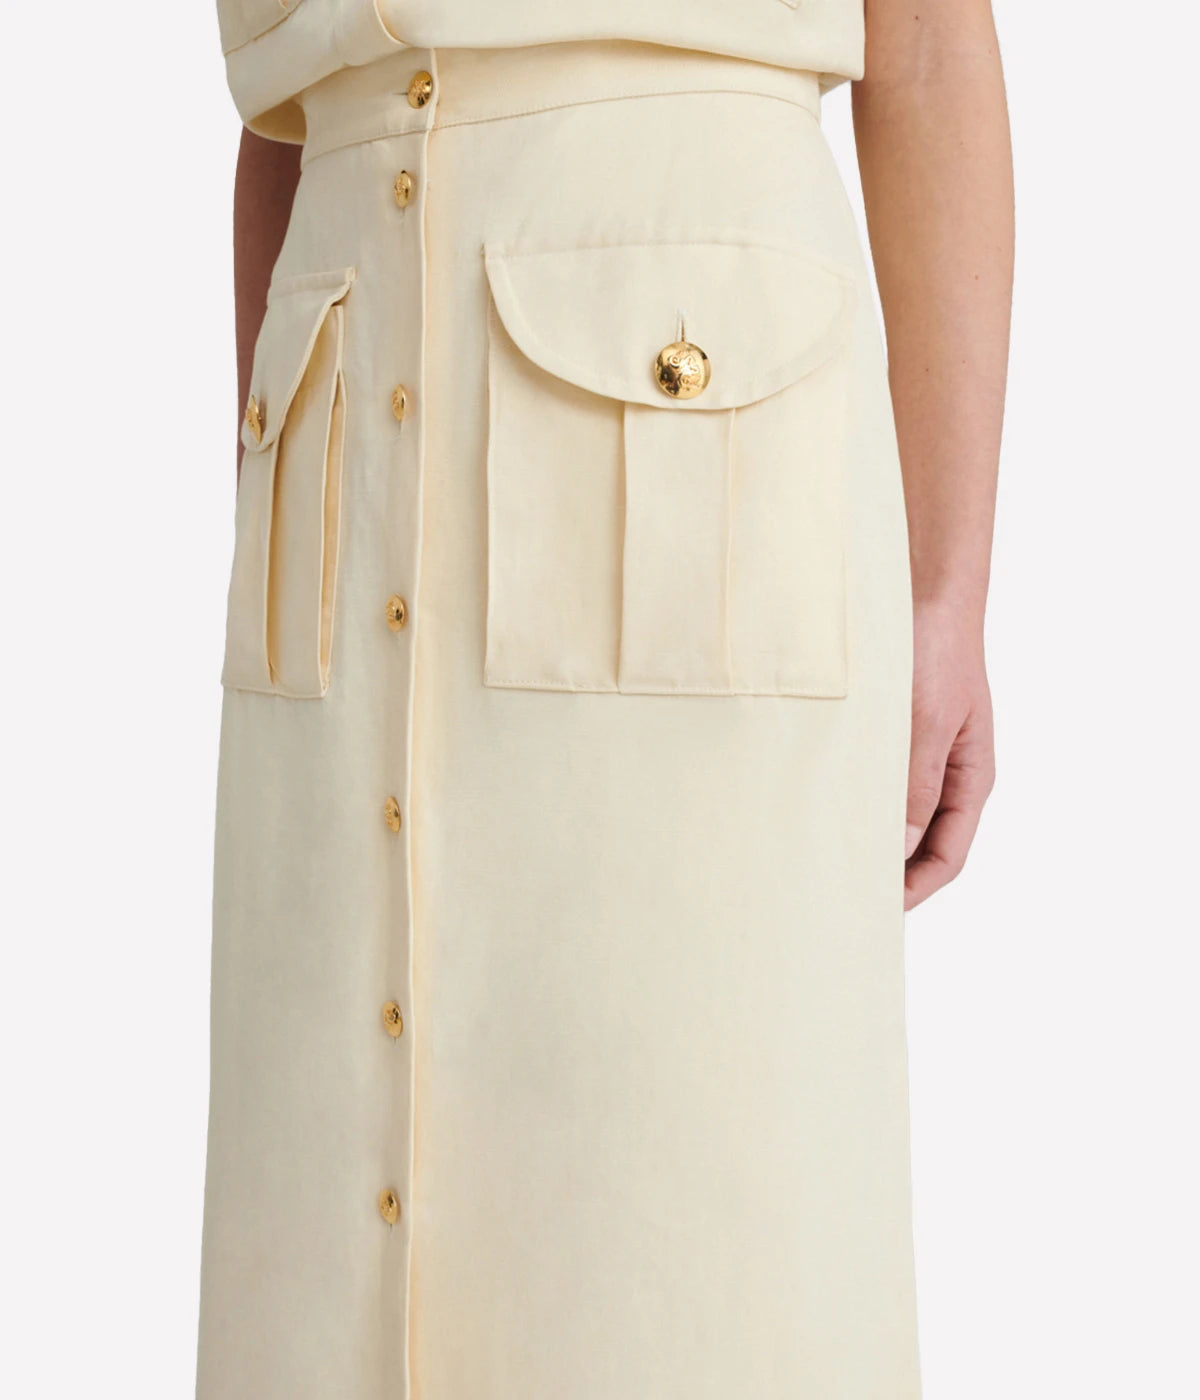 Savannah Appaloosa Skirt in Butter